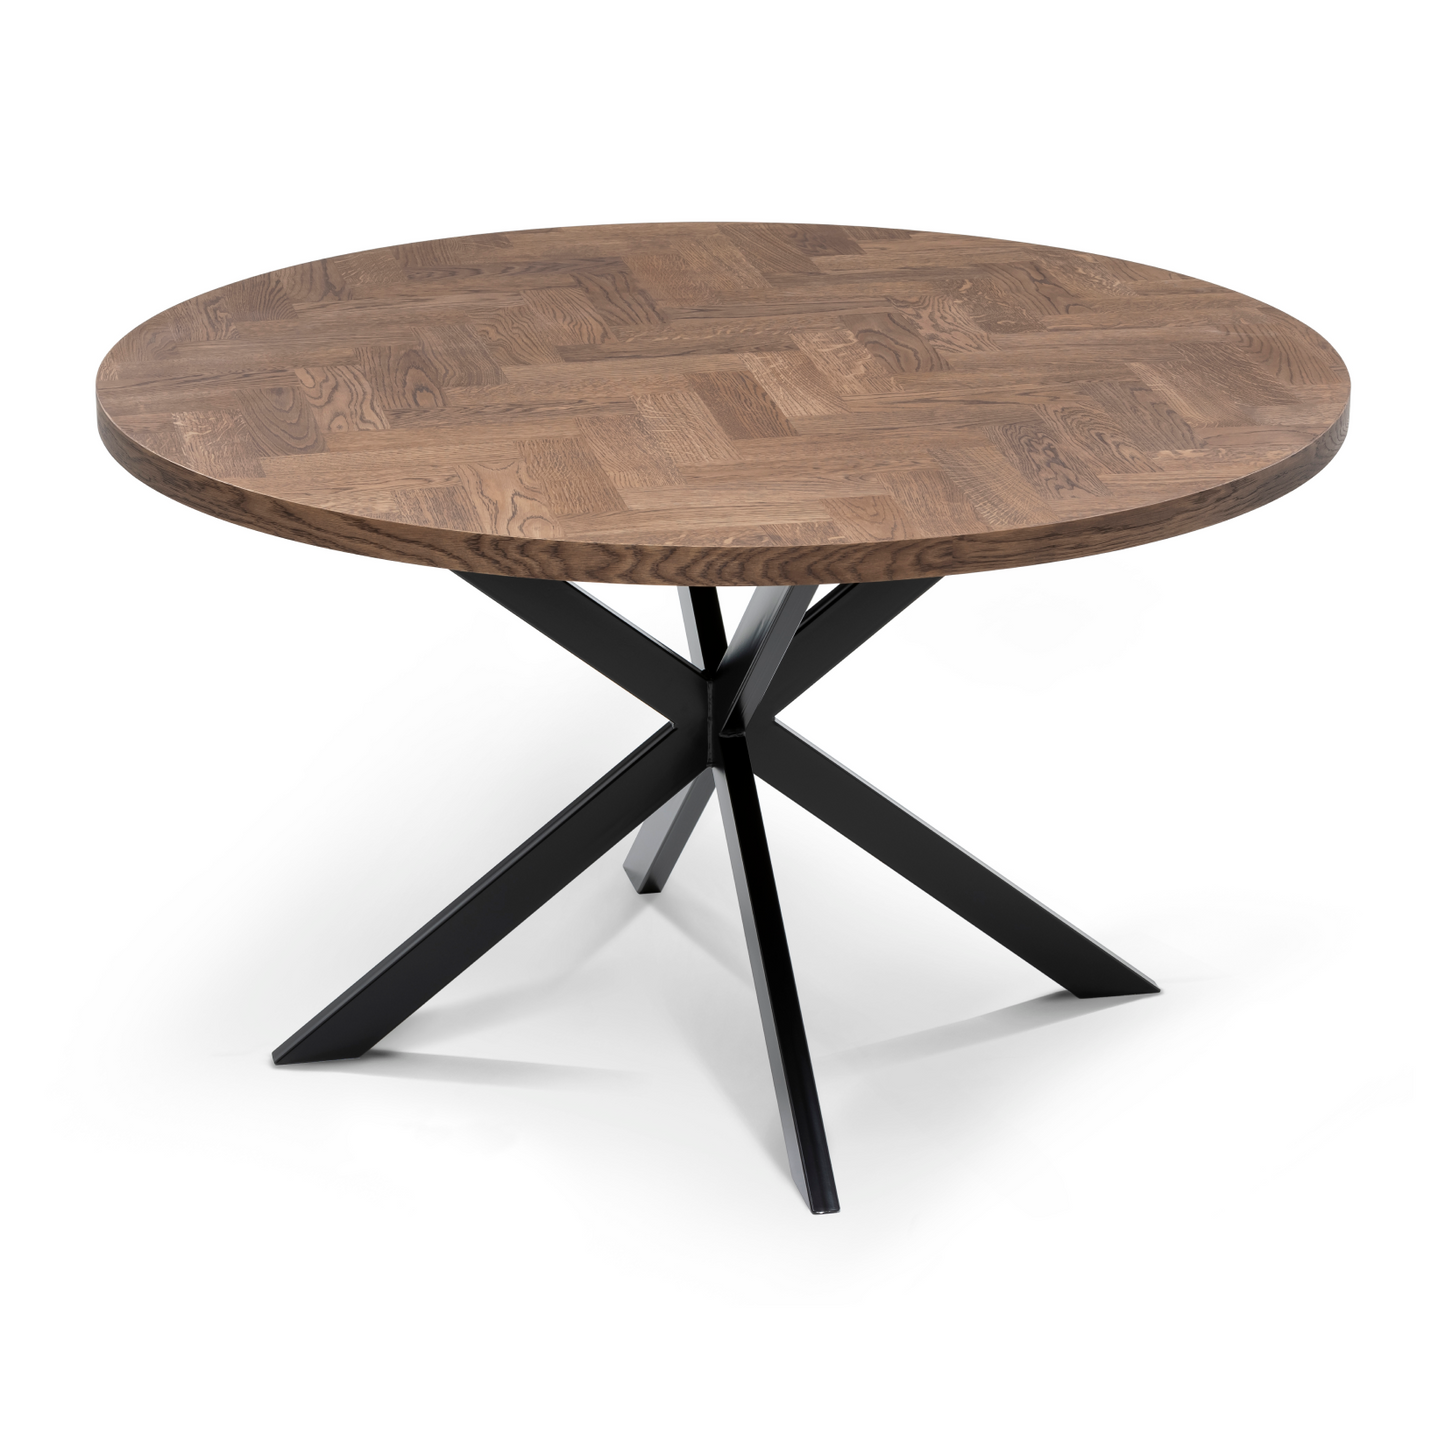 Round Parquete table